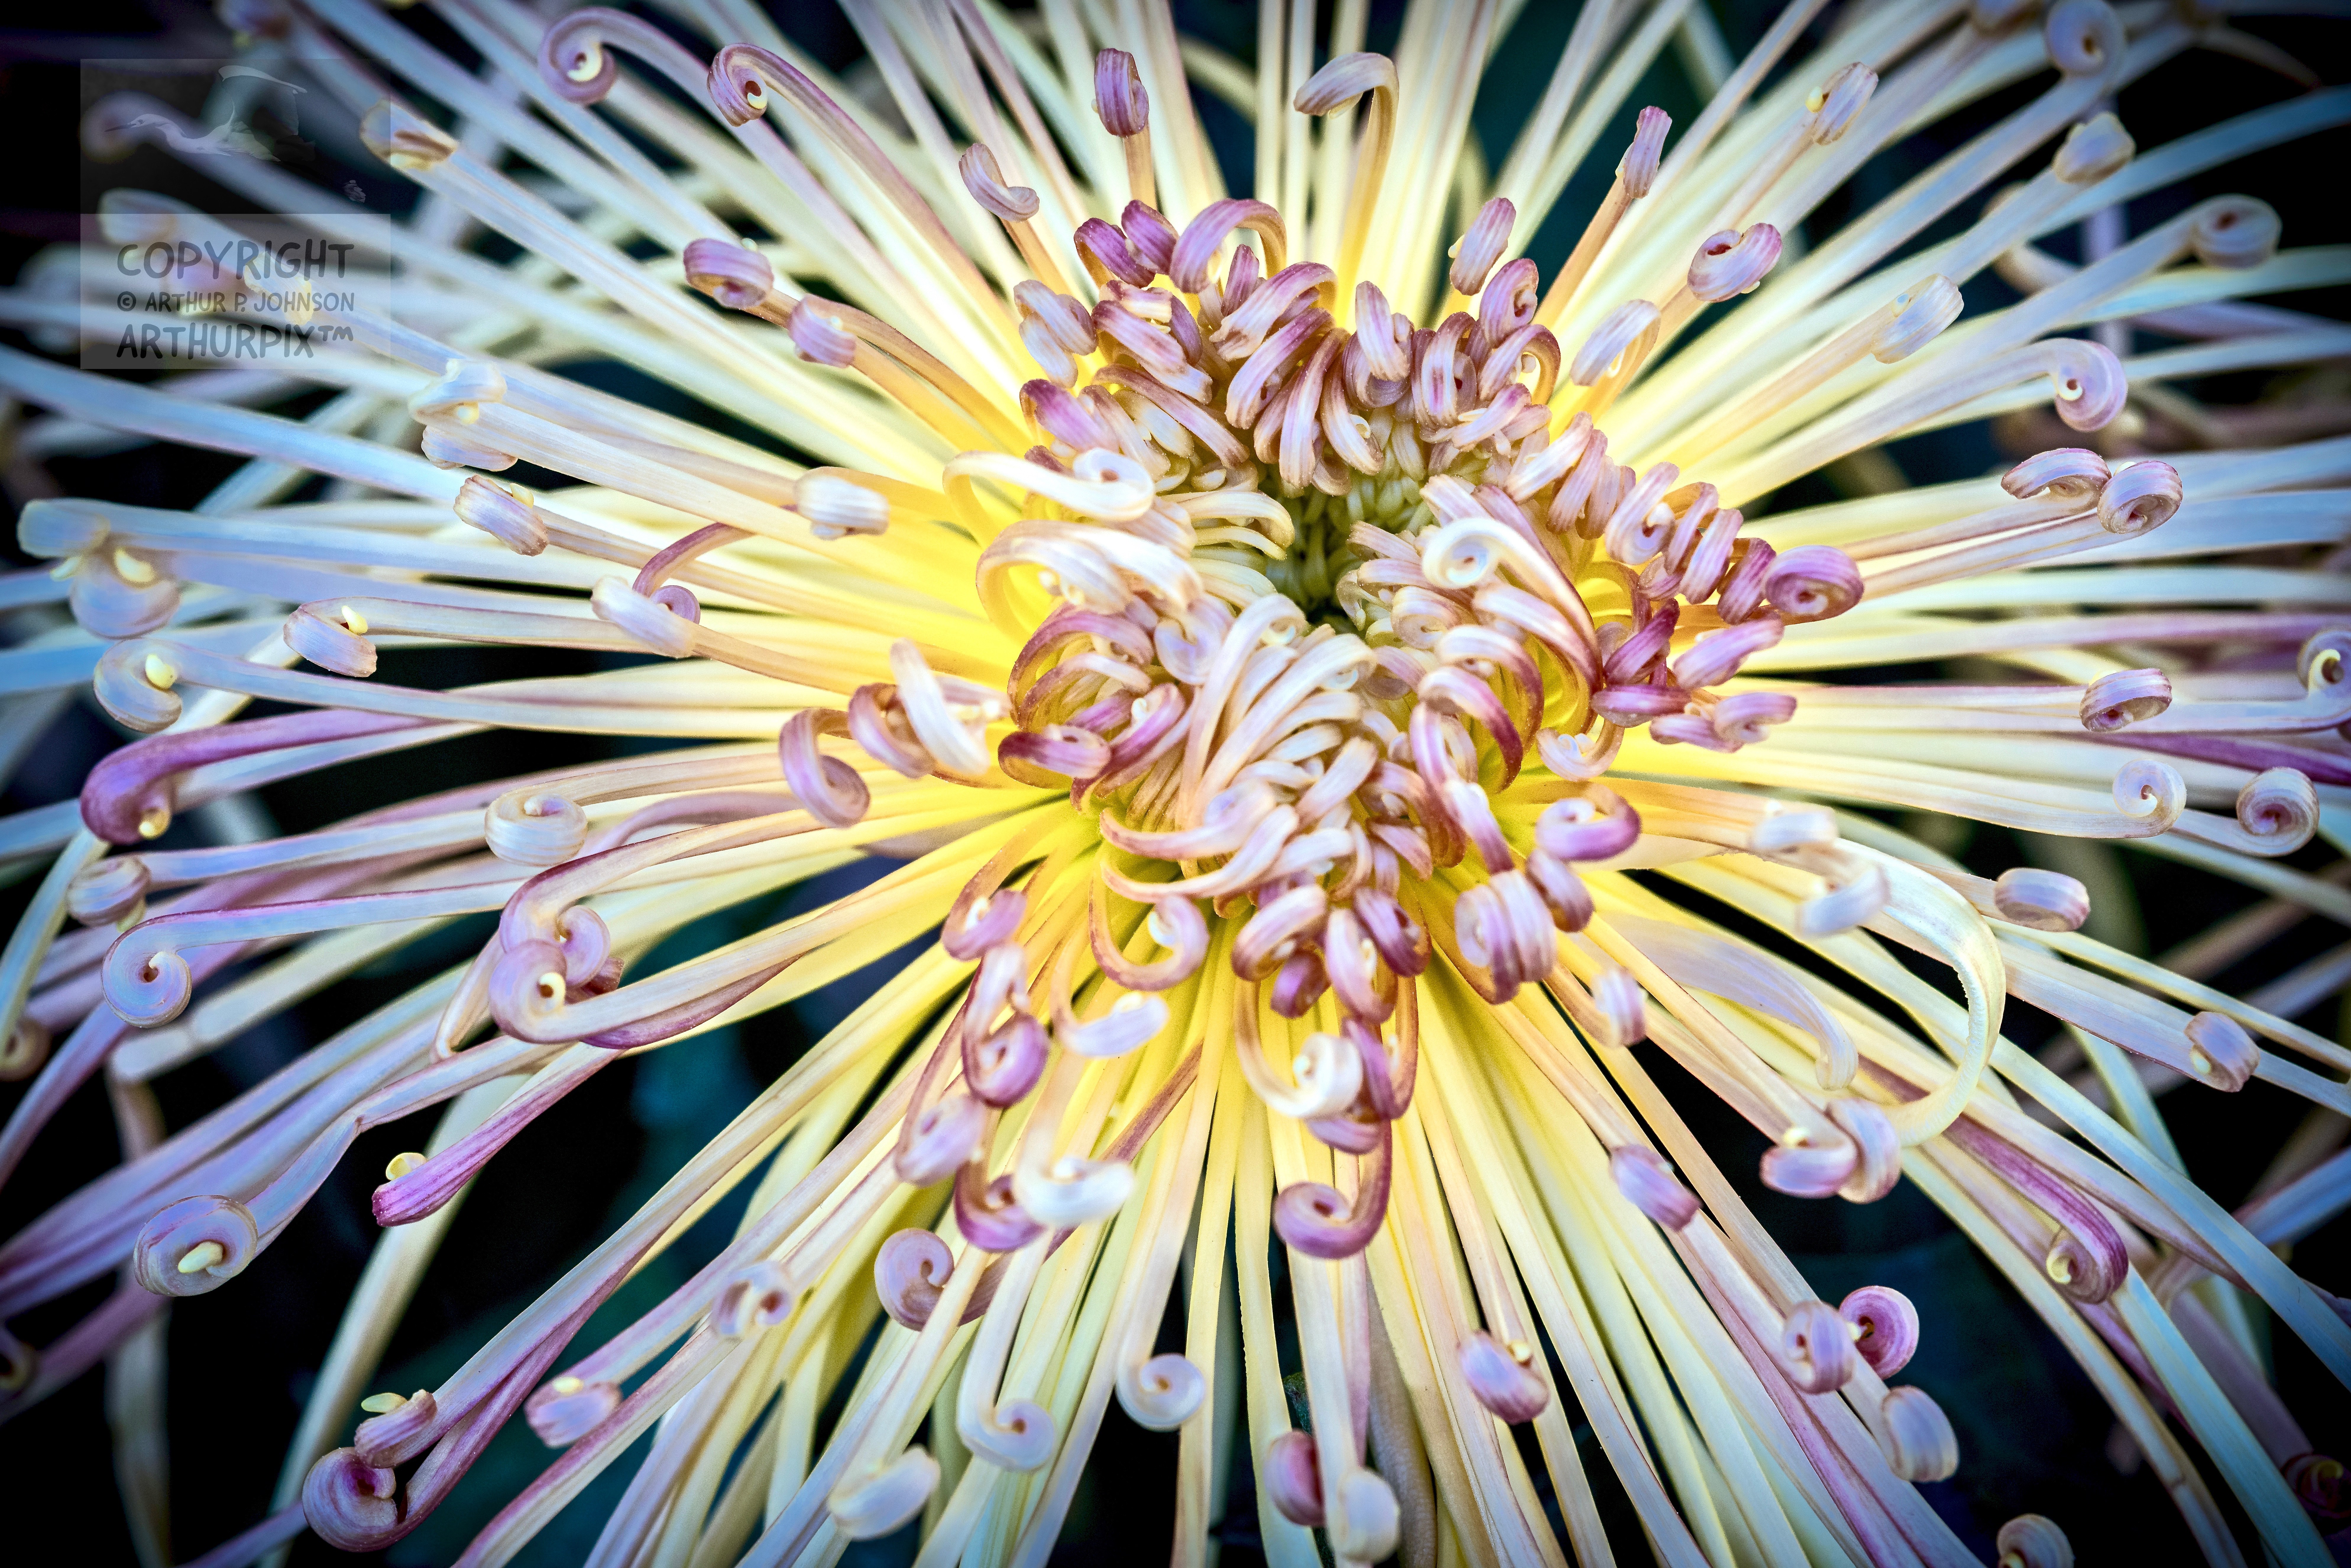 ArthurPixWindows on the WildHeart of Chrysanthemum, Part II